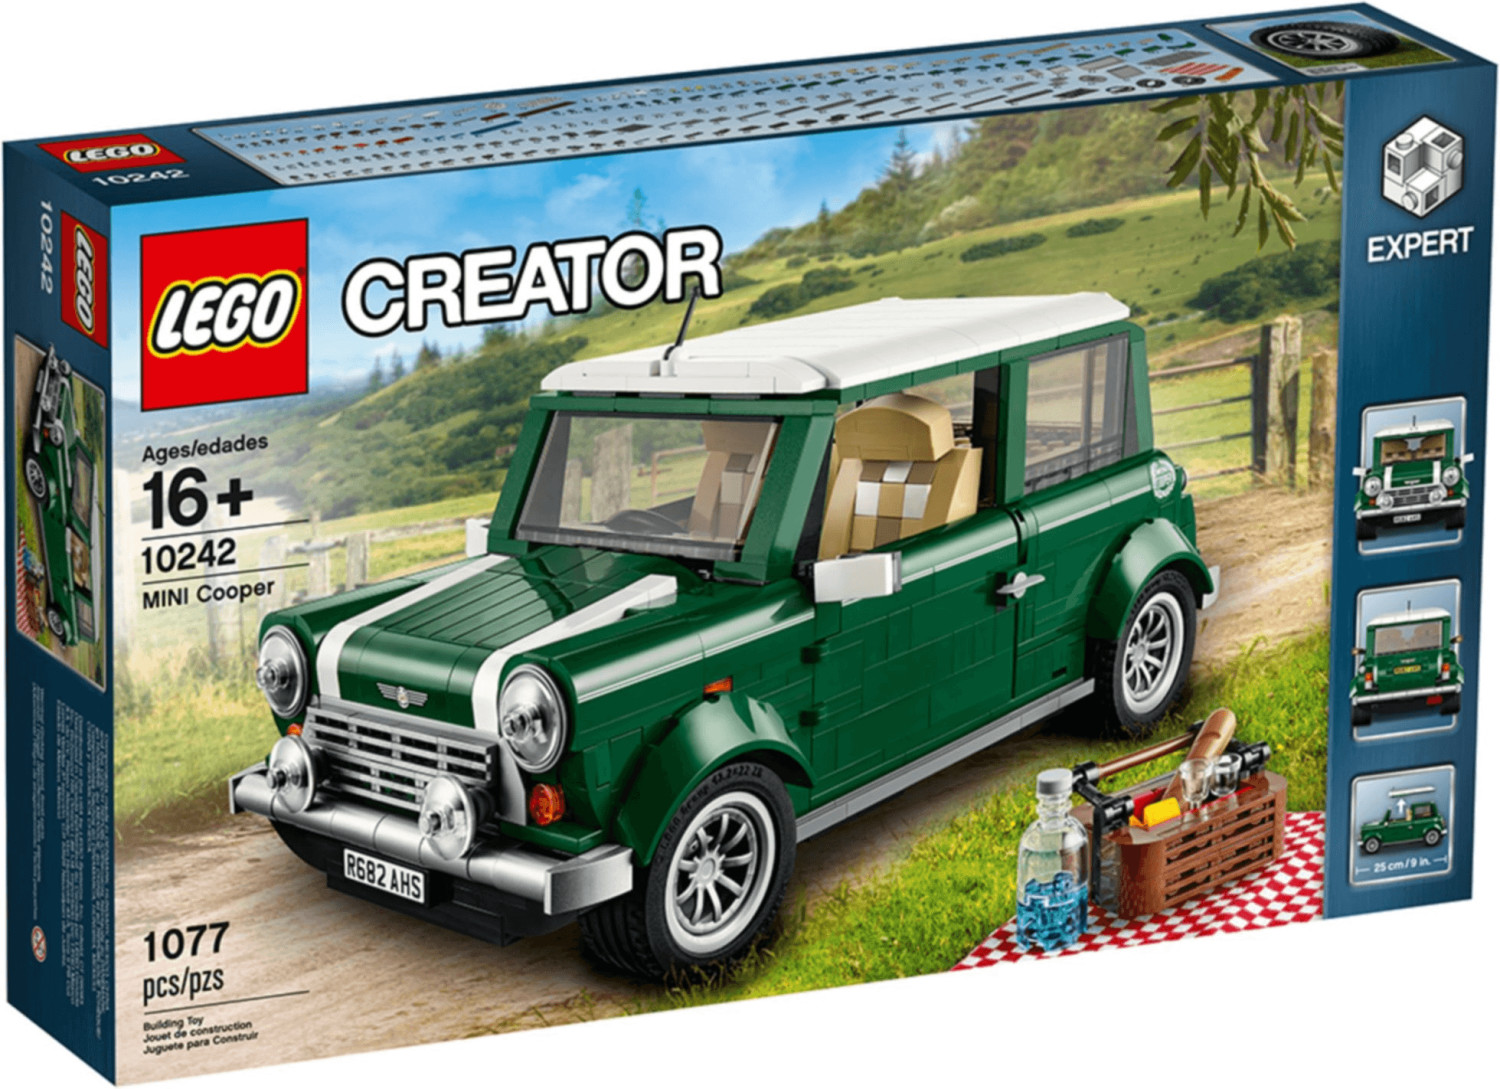 Immagine relativa a LEGO Creator - Mini Cooper 10242